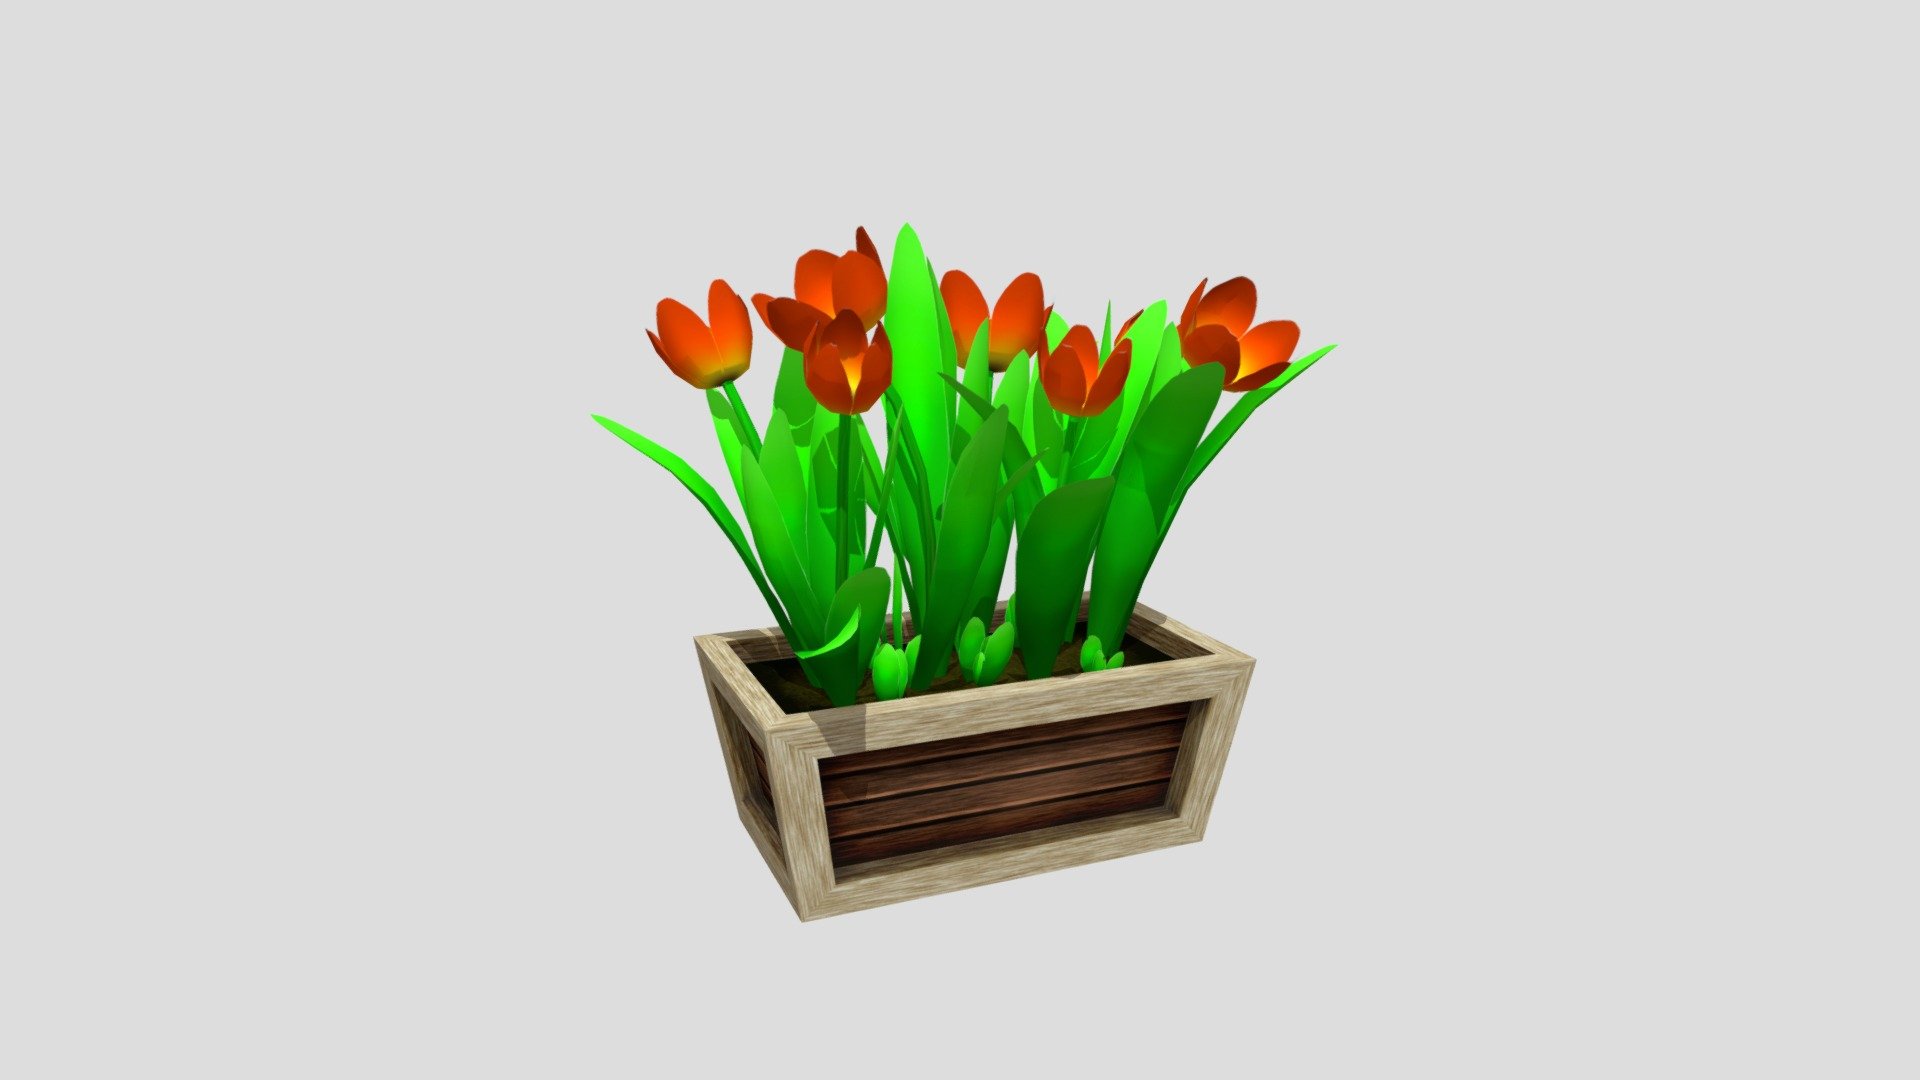 Flowers in wooden pot